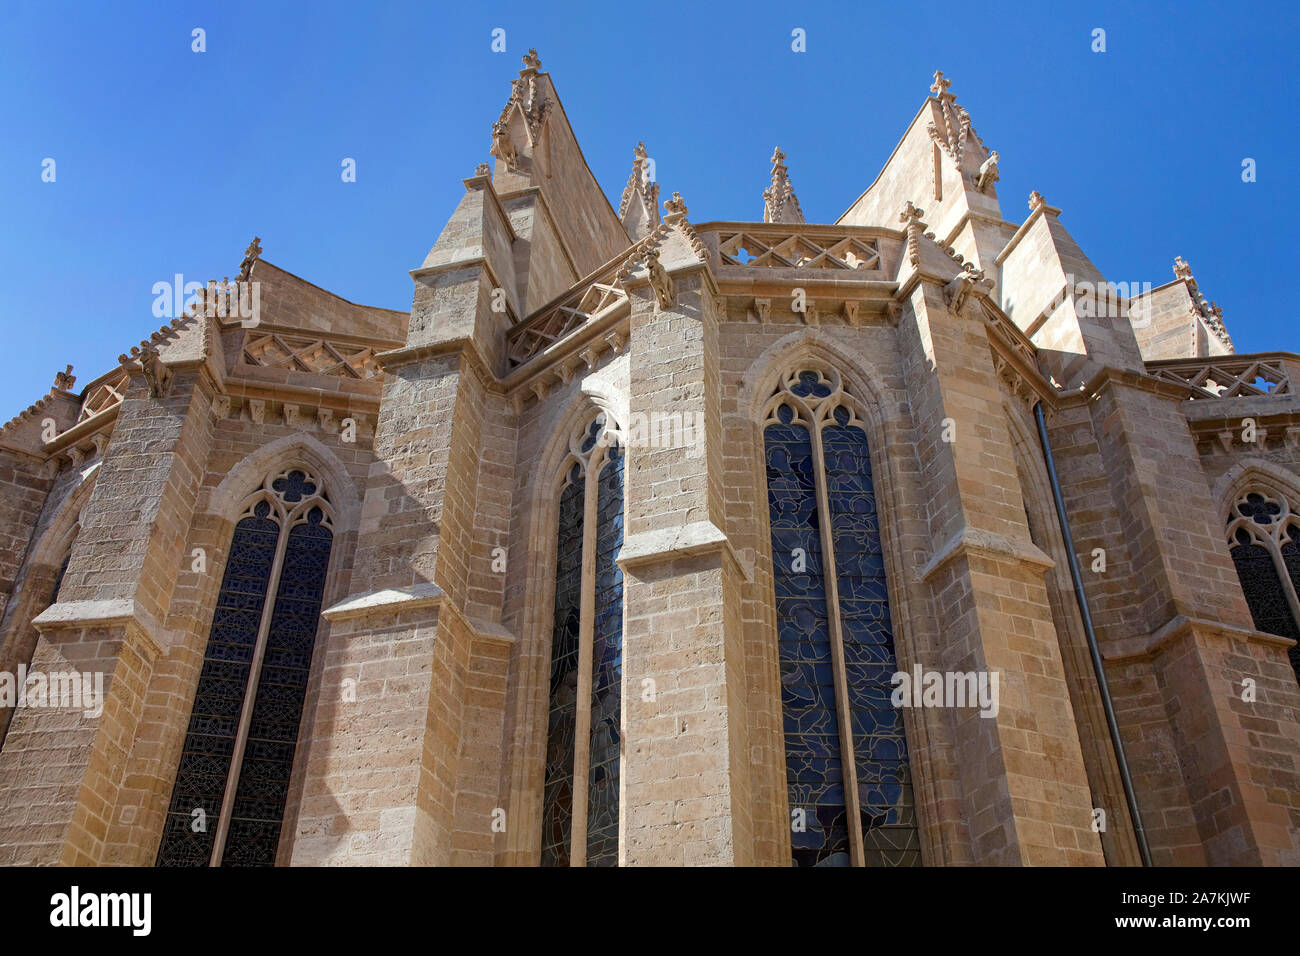 Kathedrale La Seu in Palma, Palma de Mallorca, Mallorca, Balearen, Spanien | The cathedral La Seu, landmark of Palma, Palma de Mallorca, Mallorca, Bal Stock Photo